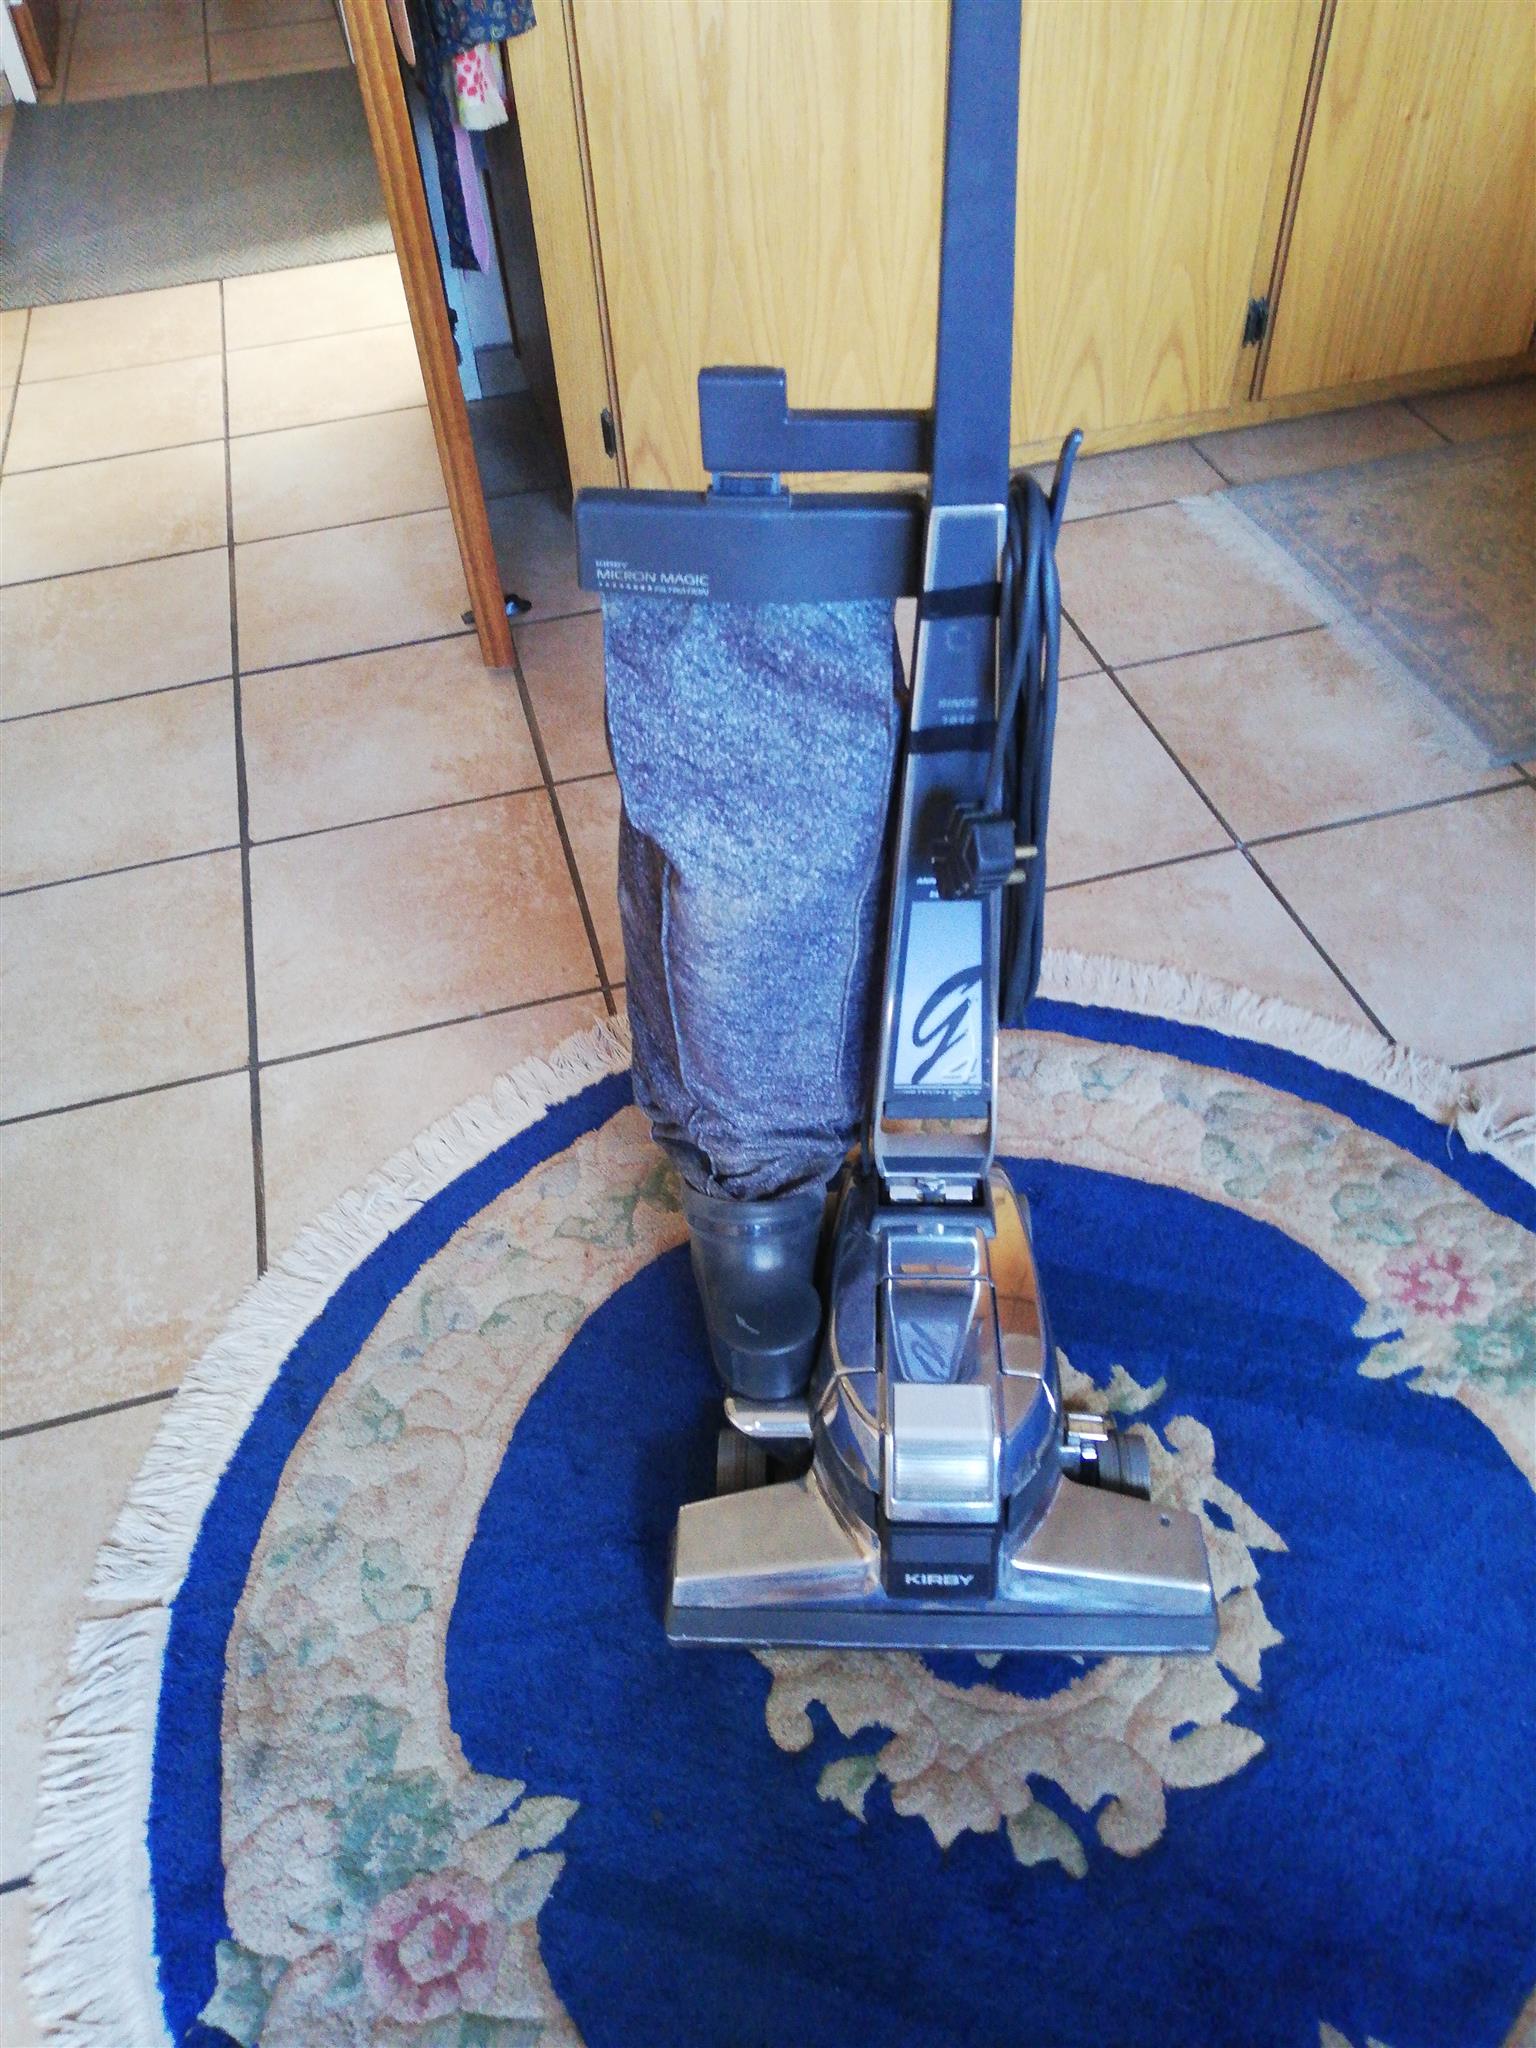 Kirby G4 vacuum cleaner